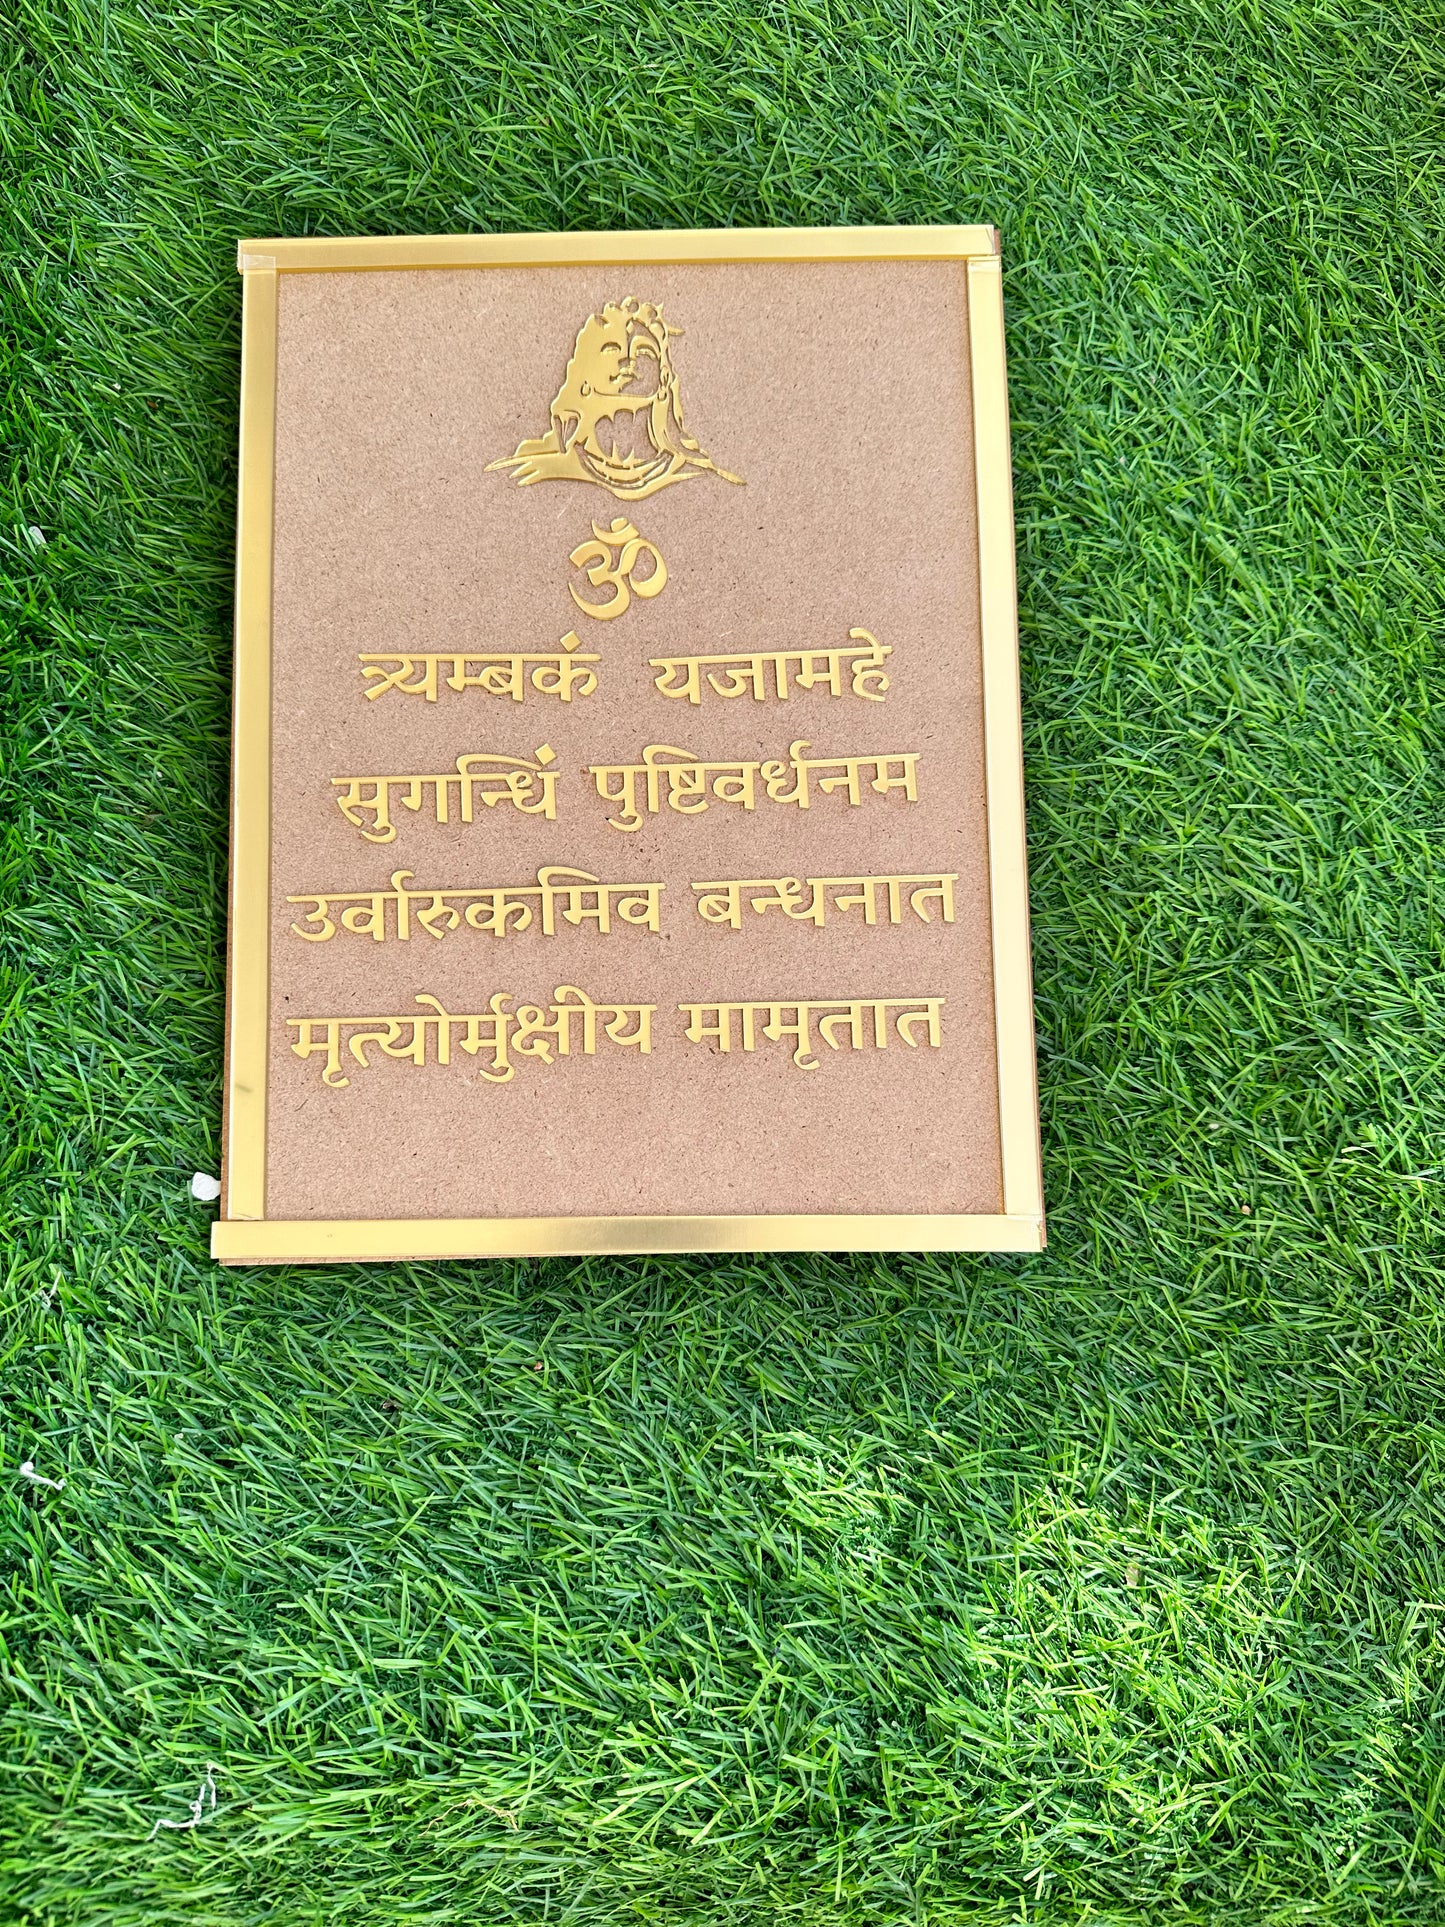 Mrityunjaya mantra with mdf frame